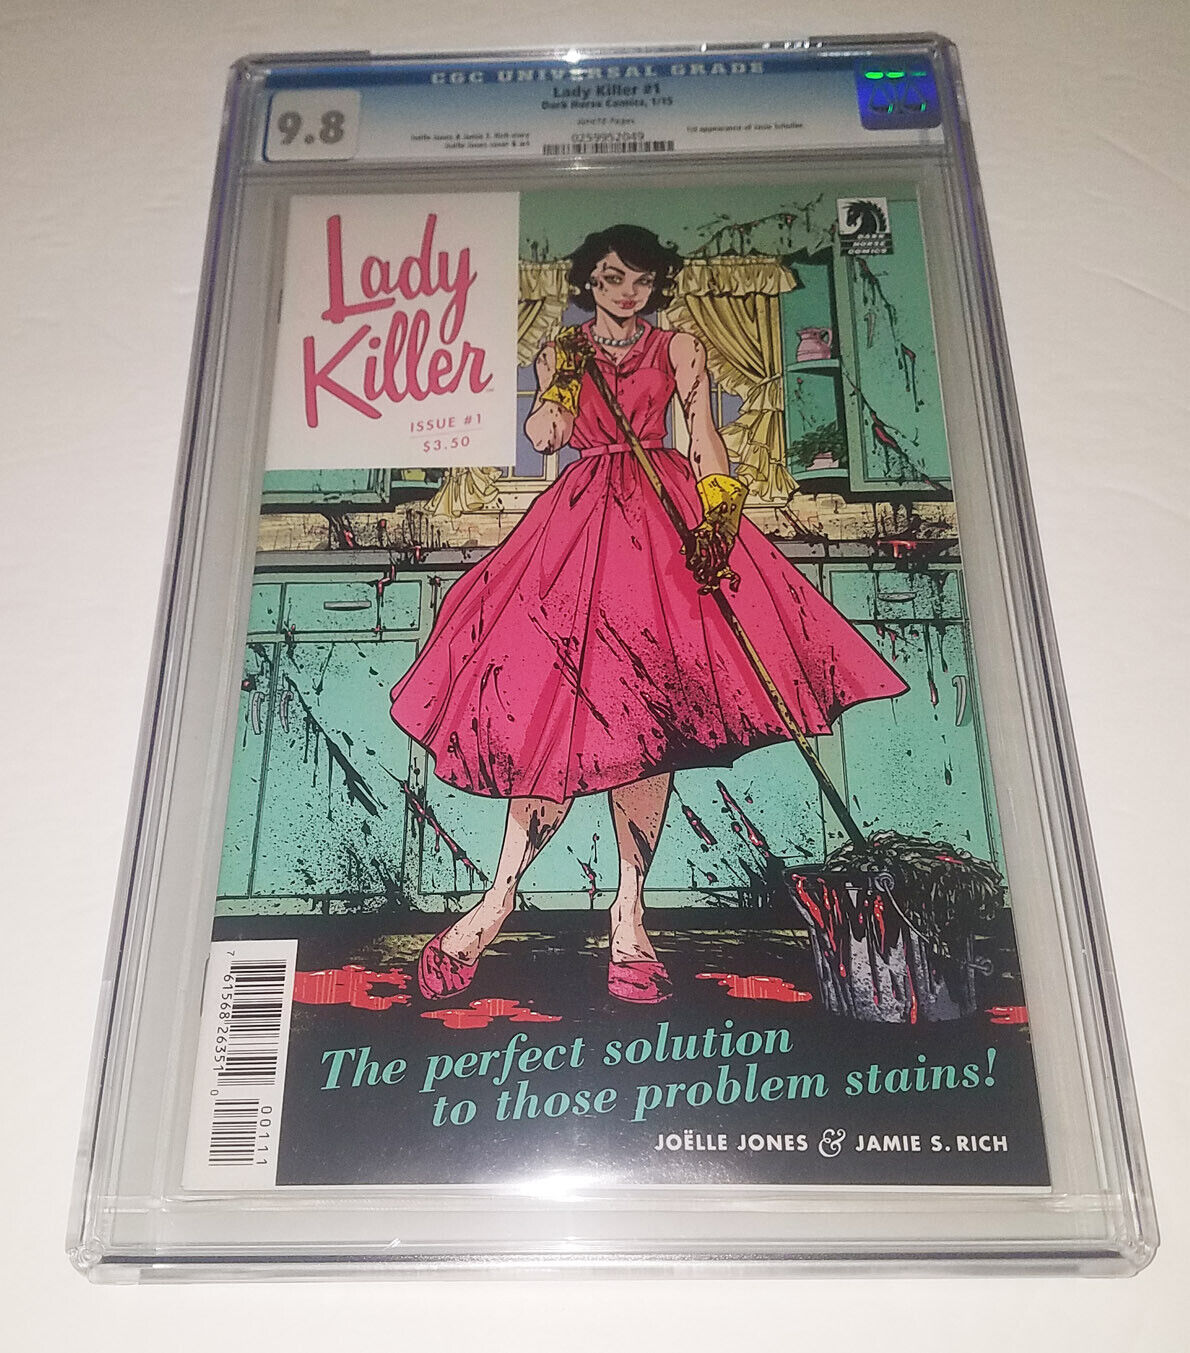 LADY KILLER #1 (2015) First Print / Cover A - Joelle Jones - CGC 9.8